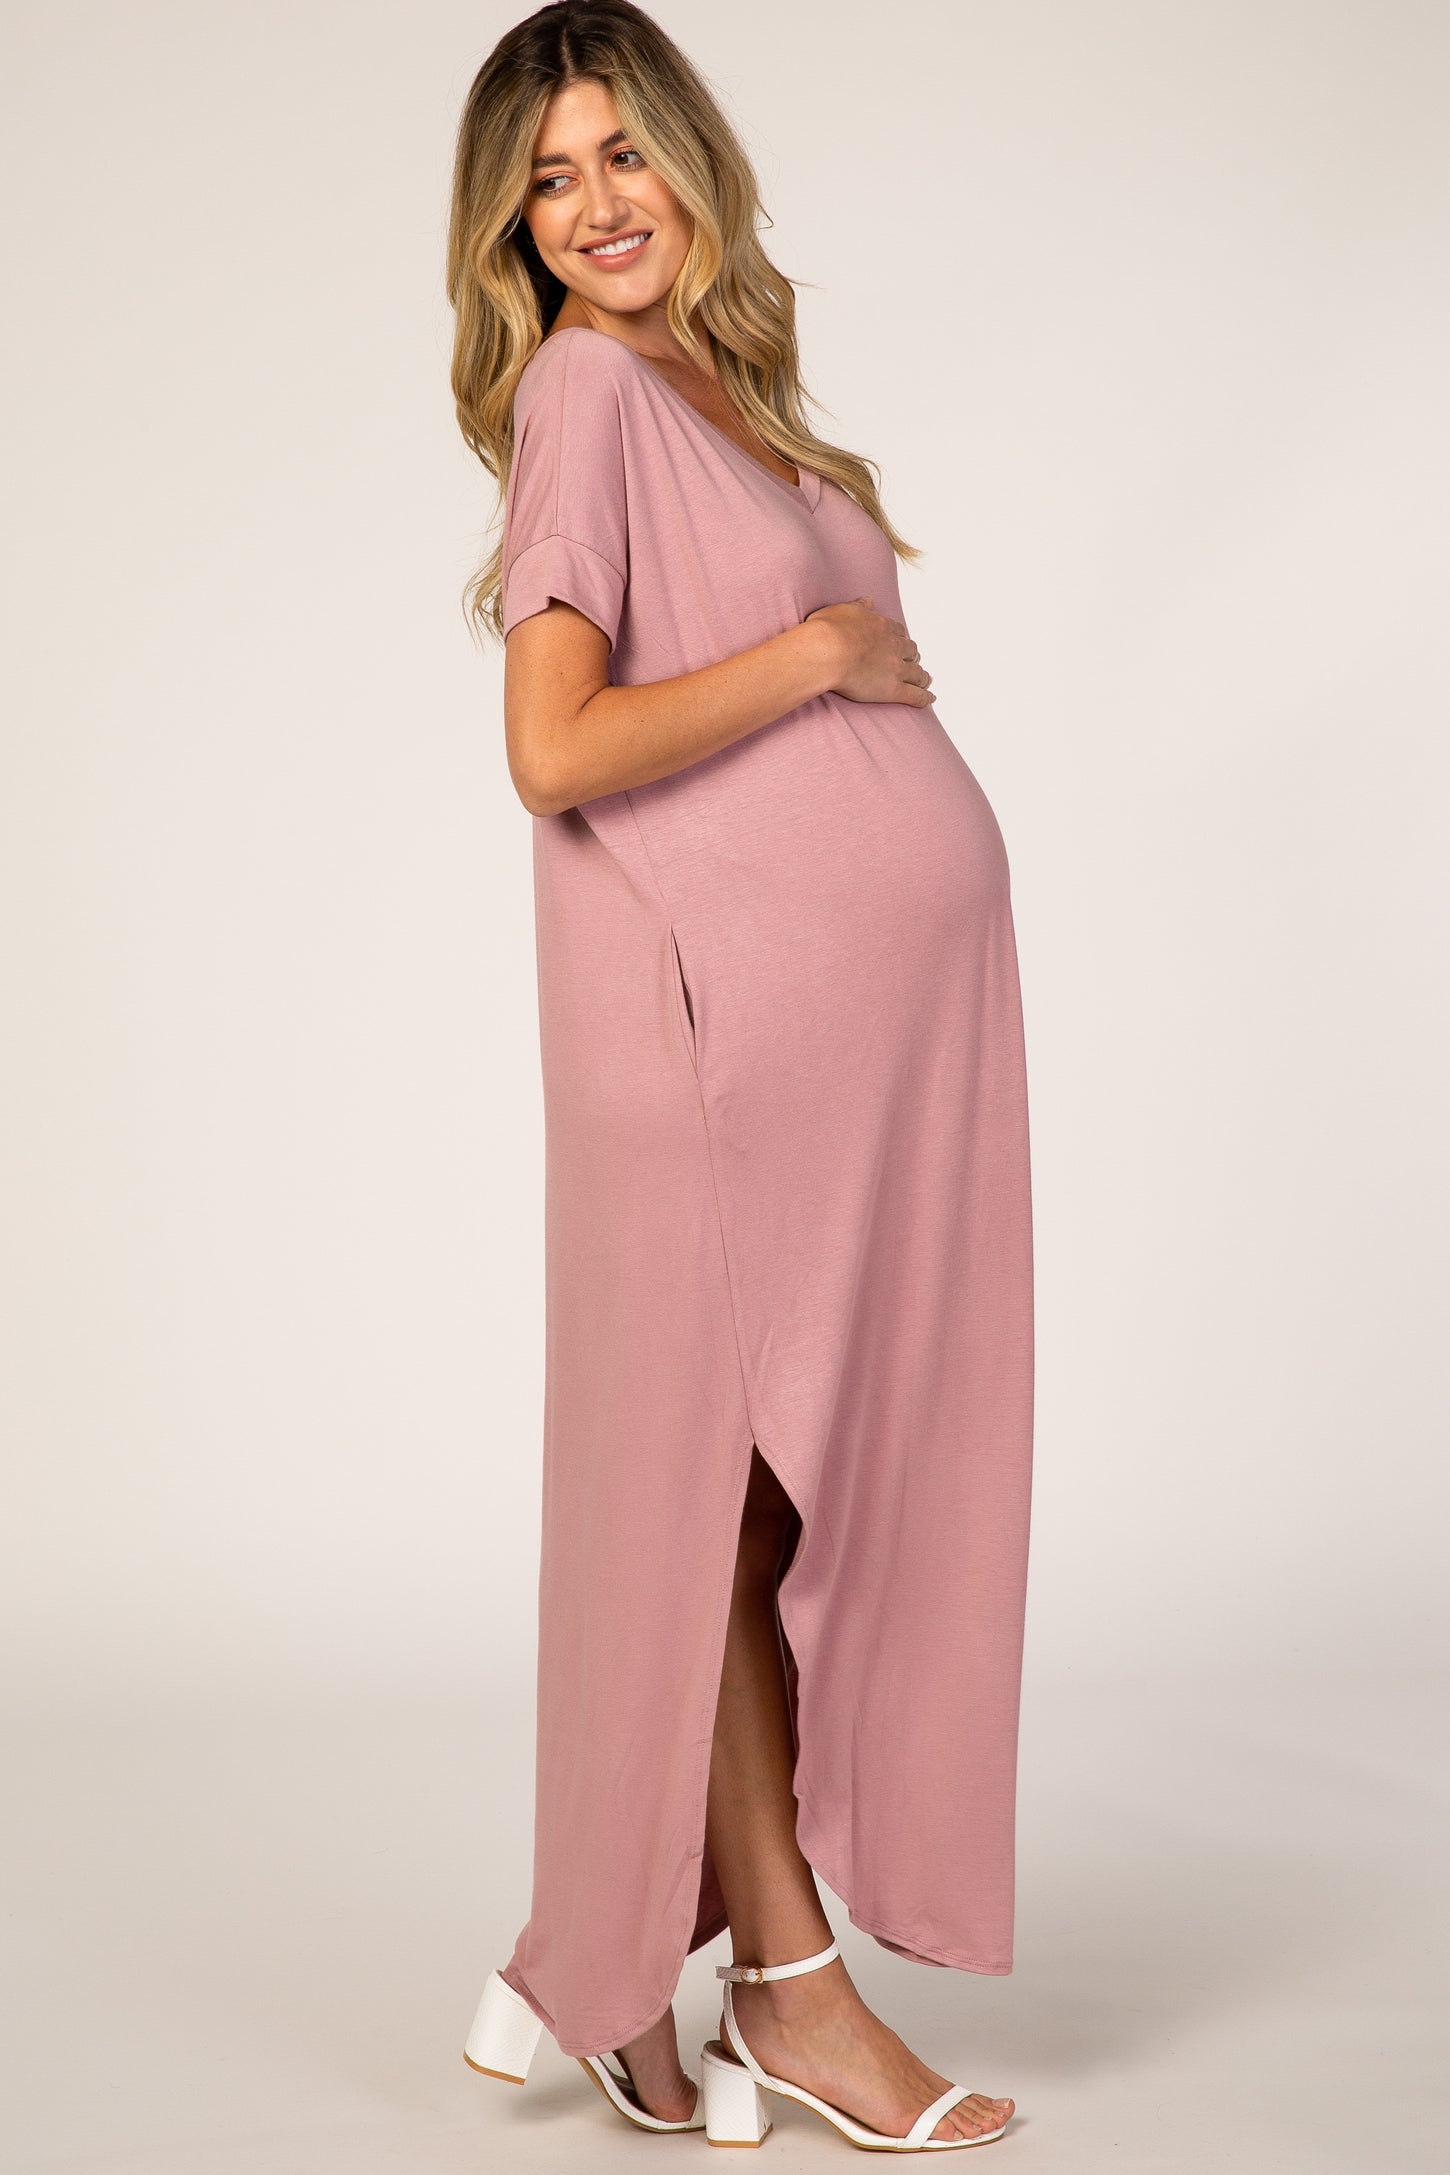 Mauve V-Neck Short Sleeve Maternity Maxi Dress